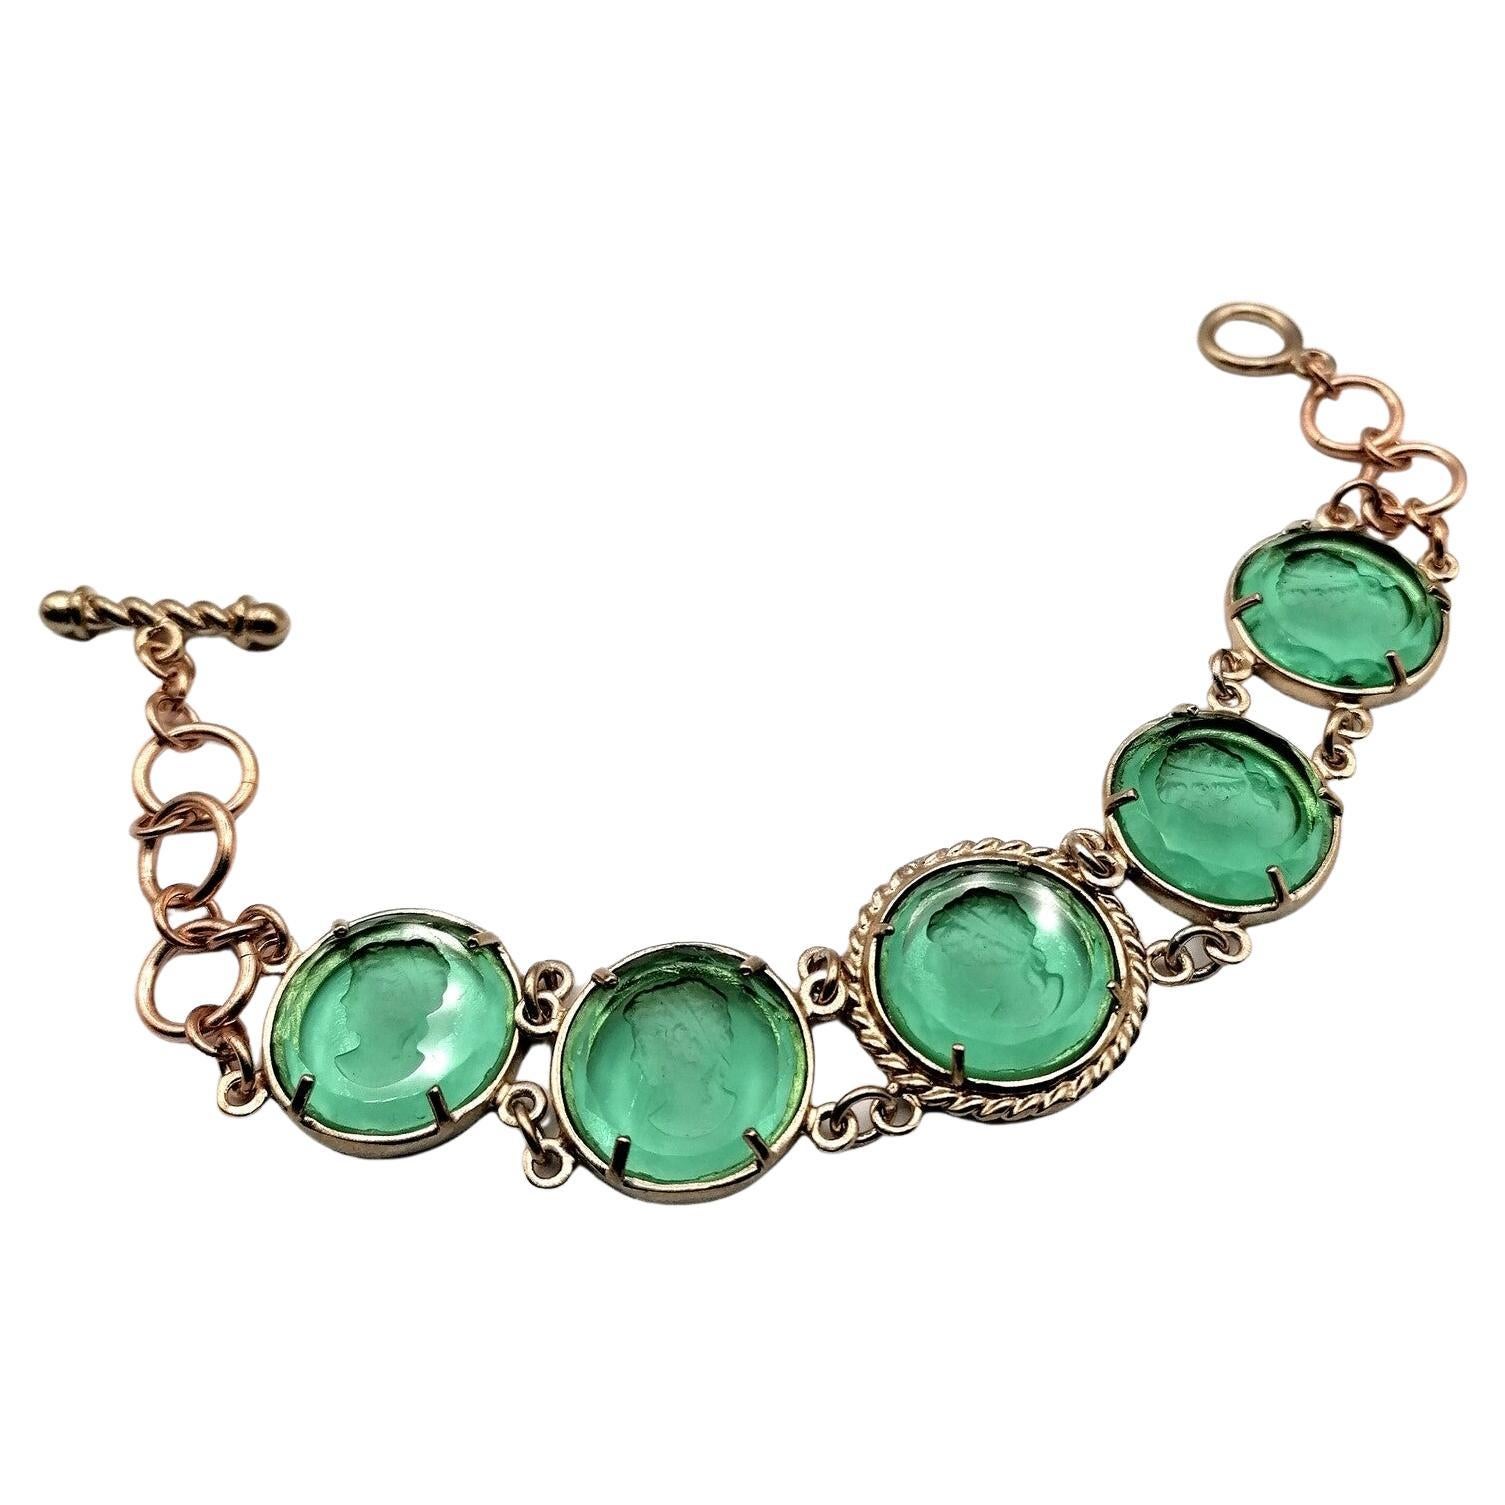 Smaragdgrünes Armband aus reiner Bronze und Muranoglas von Patrizia Daliana